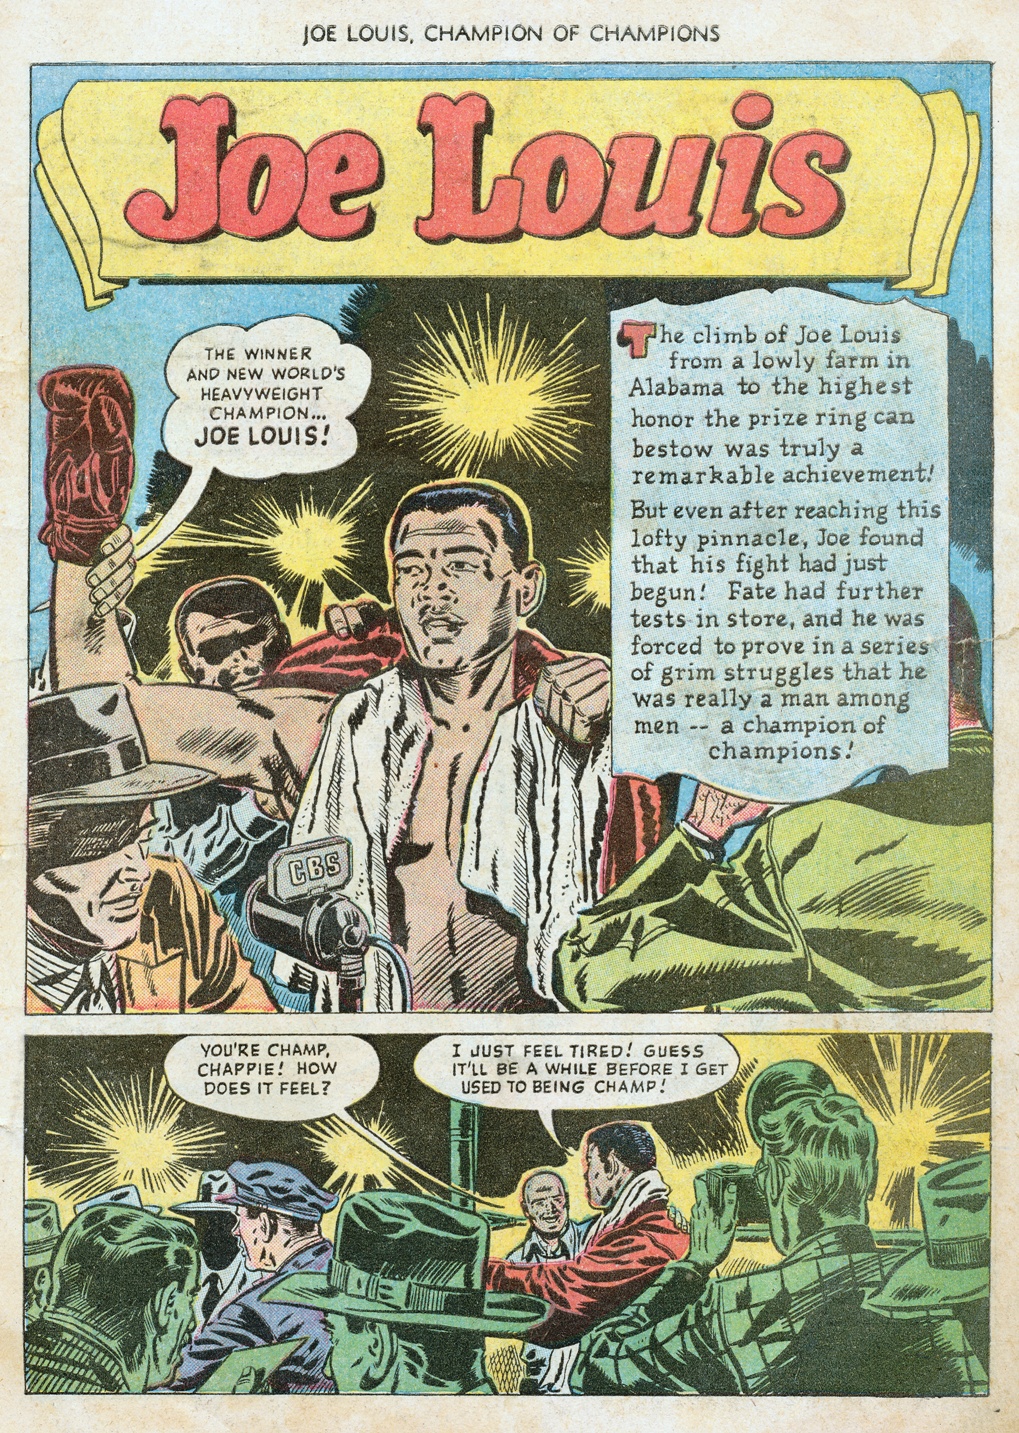 1941 Joe Louis vs. Tony Musto Fight Worn Gloves from the Ring, Lot #81075